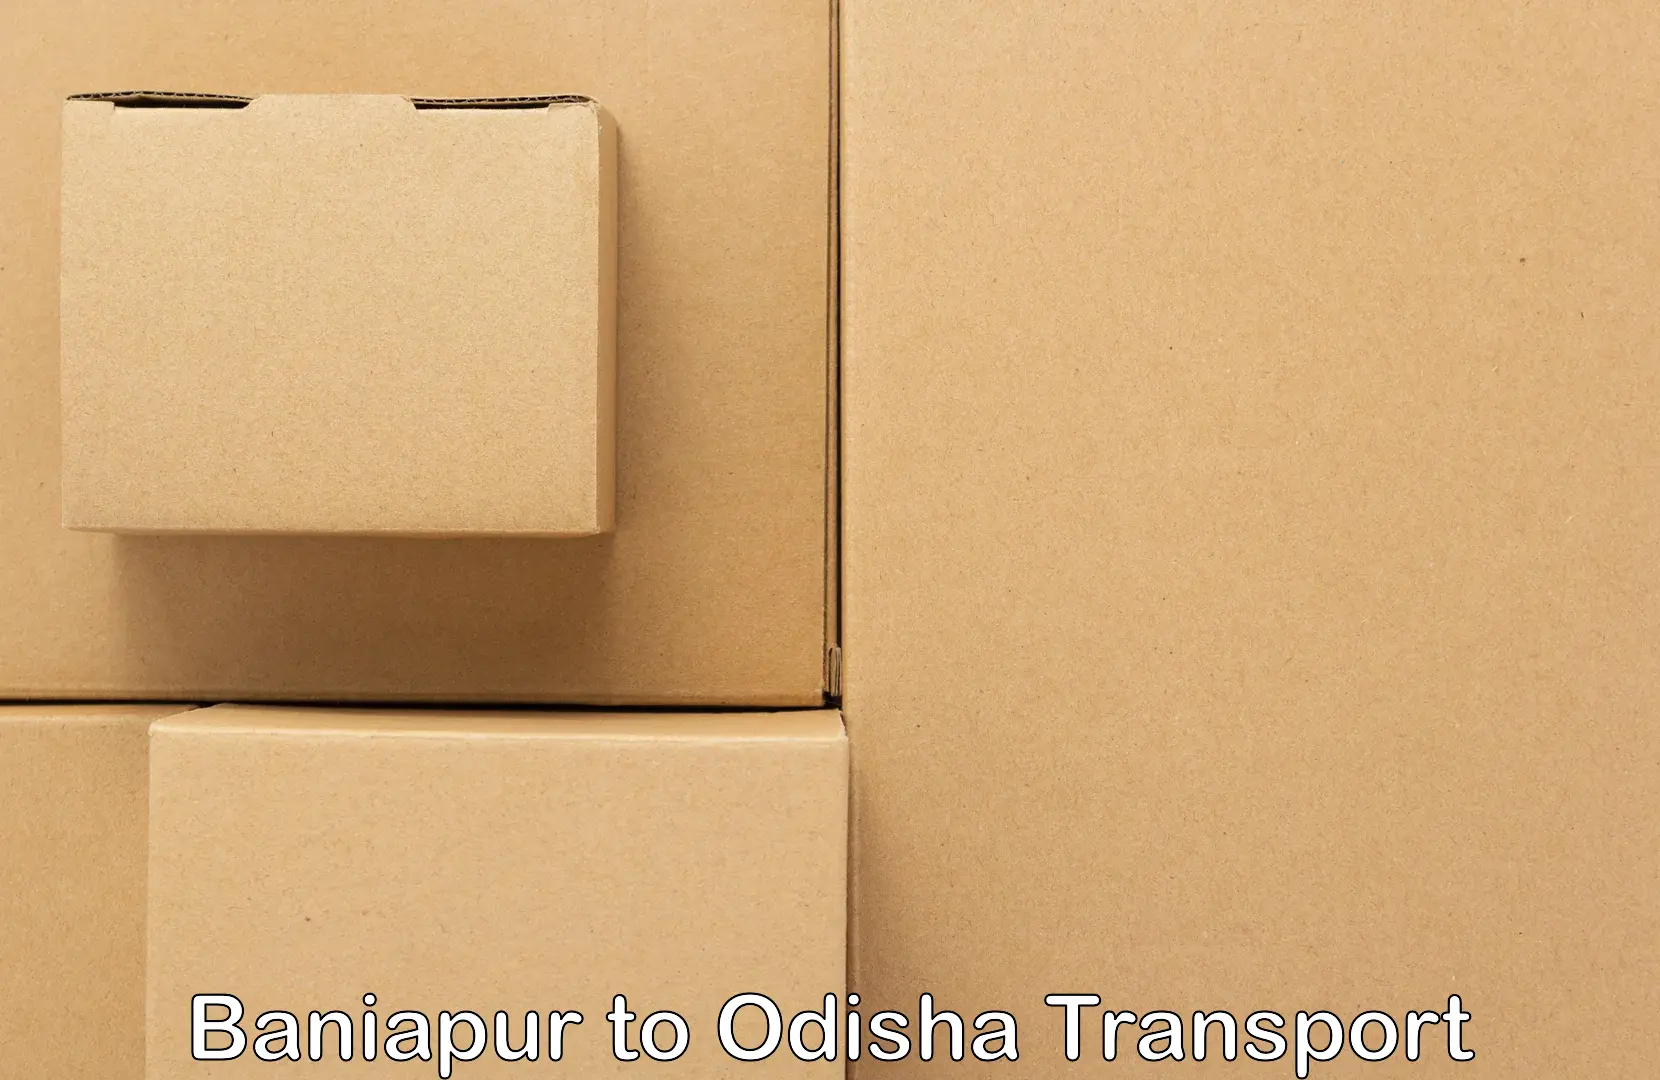 Daily parcel service transport Baniapur to Raruan